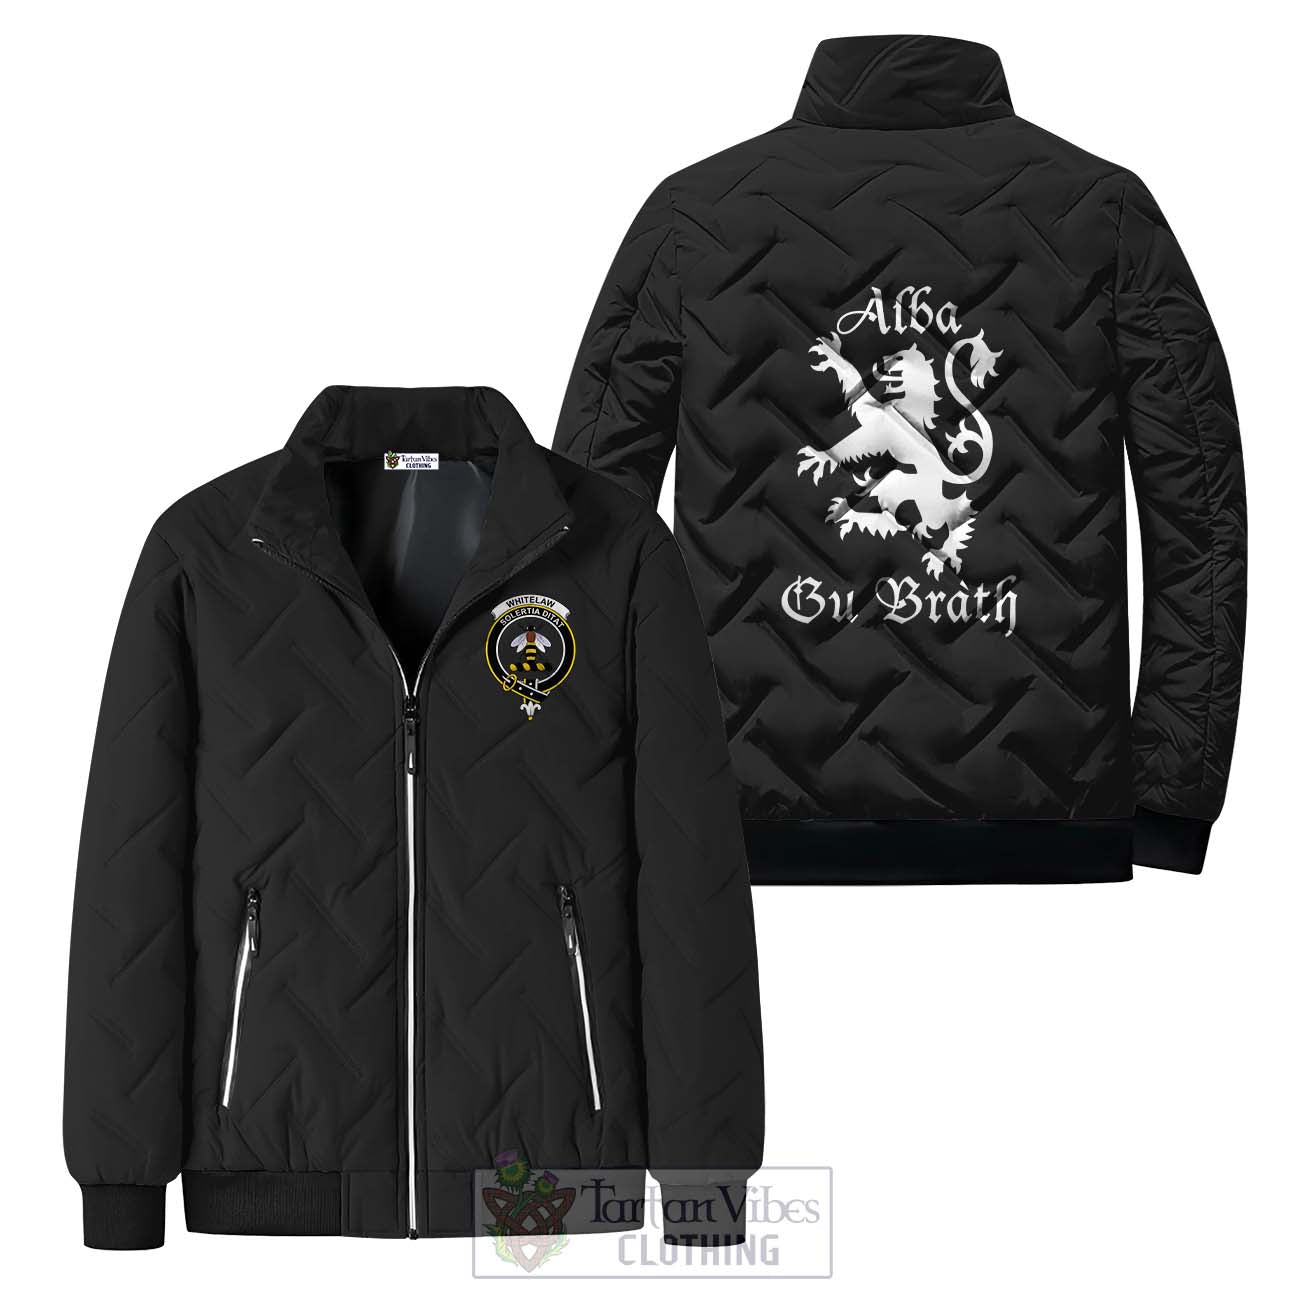 Tartan Vibes Clothing Whitelaw Family Crest Padded Cotton Jacket Lion Rampant Alba Gu Brath Style